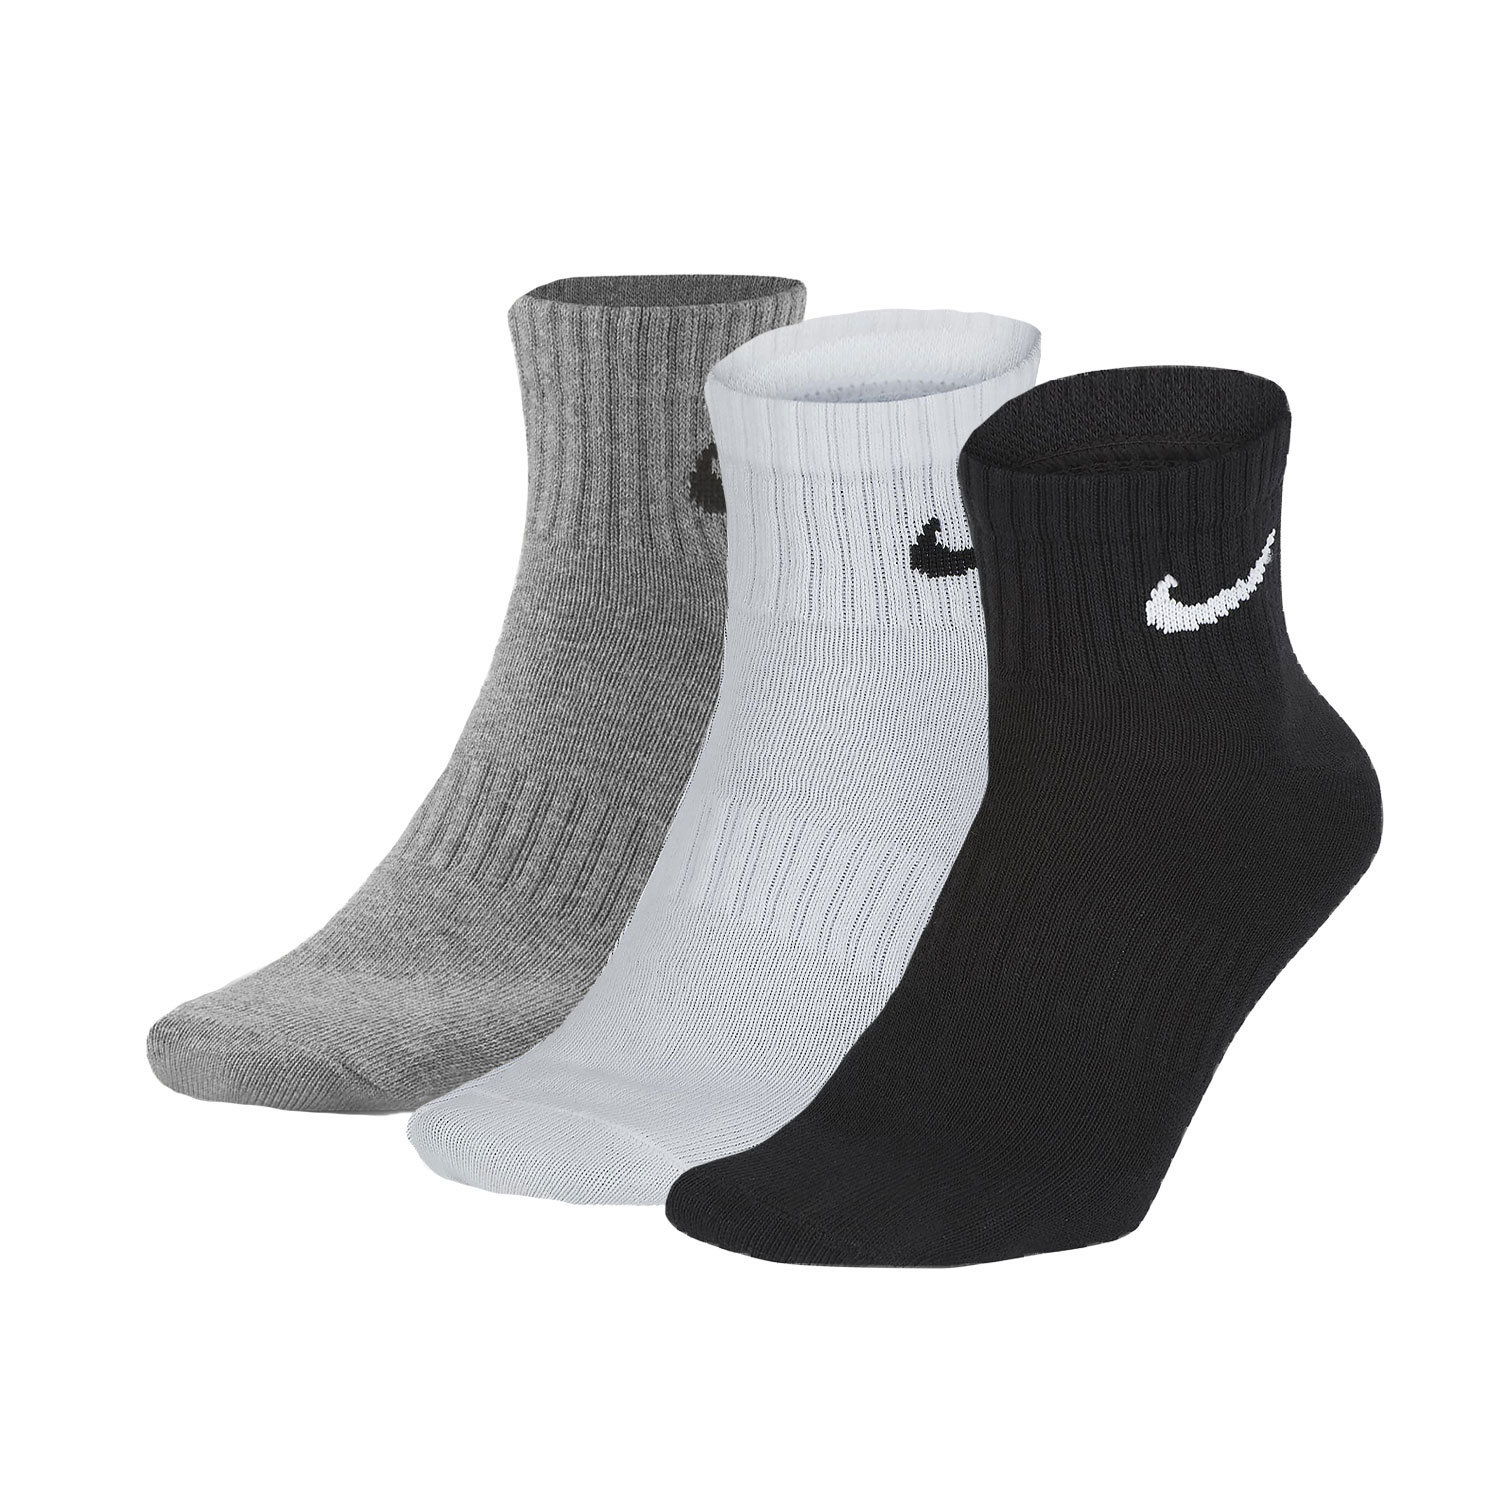 Nike Everyday Light Weight x 3 Socks - White/Black/Dark Grey